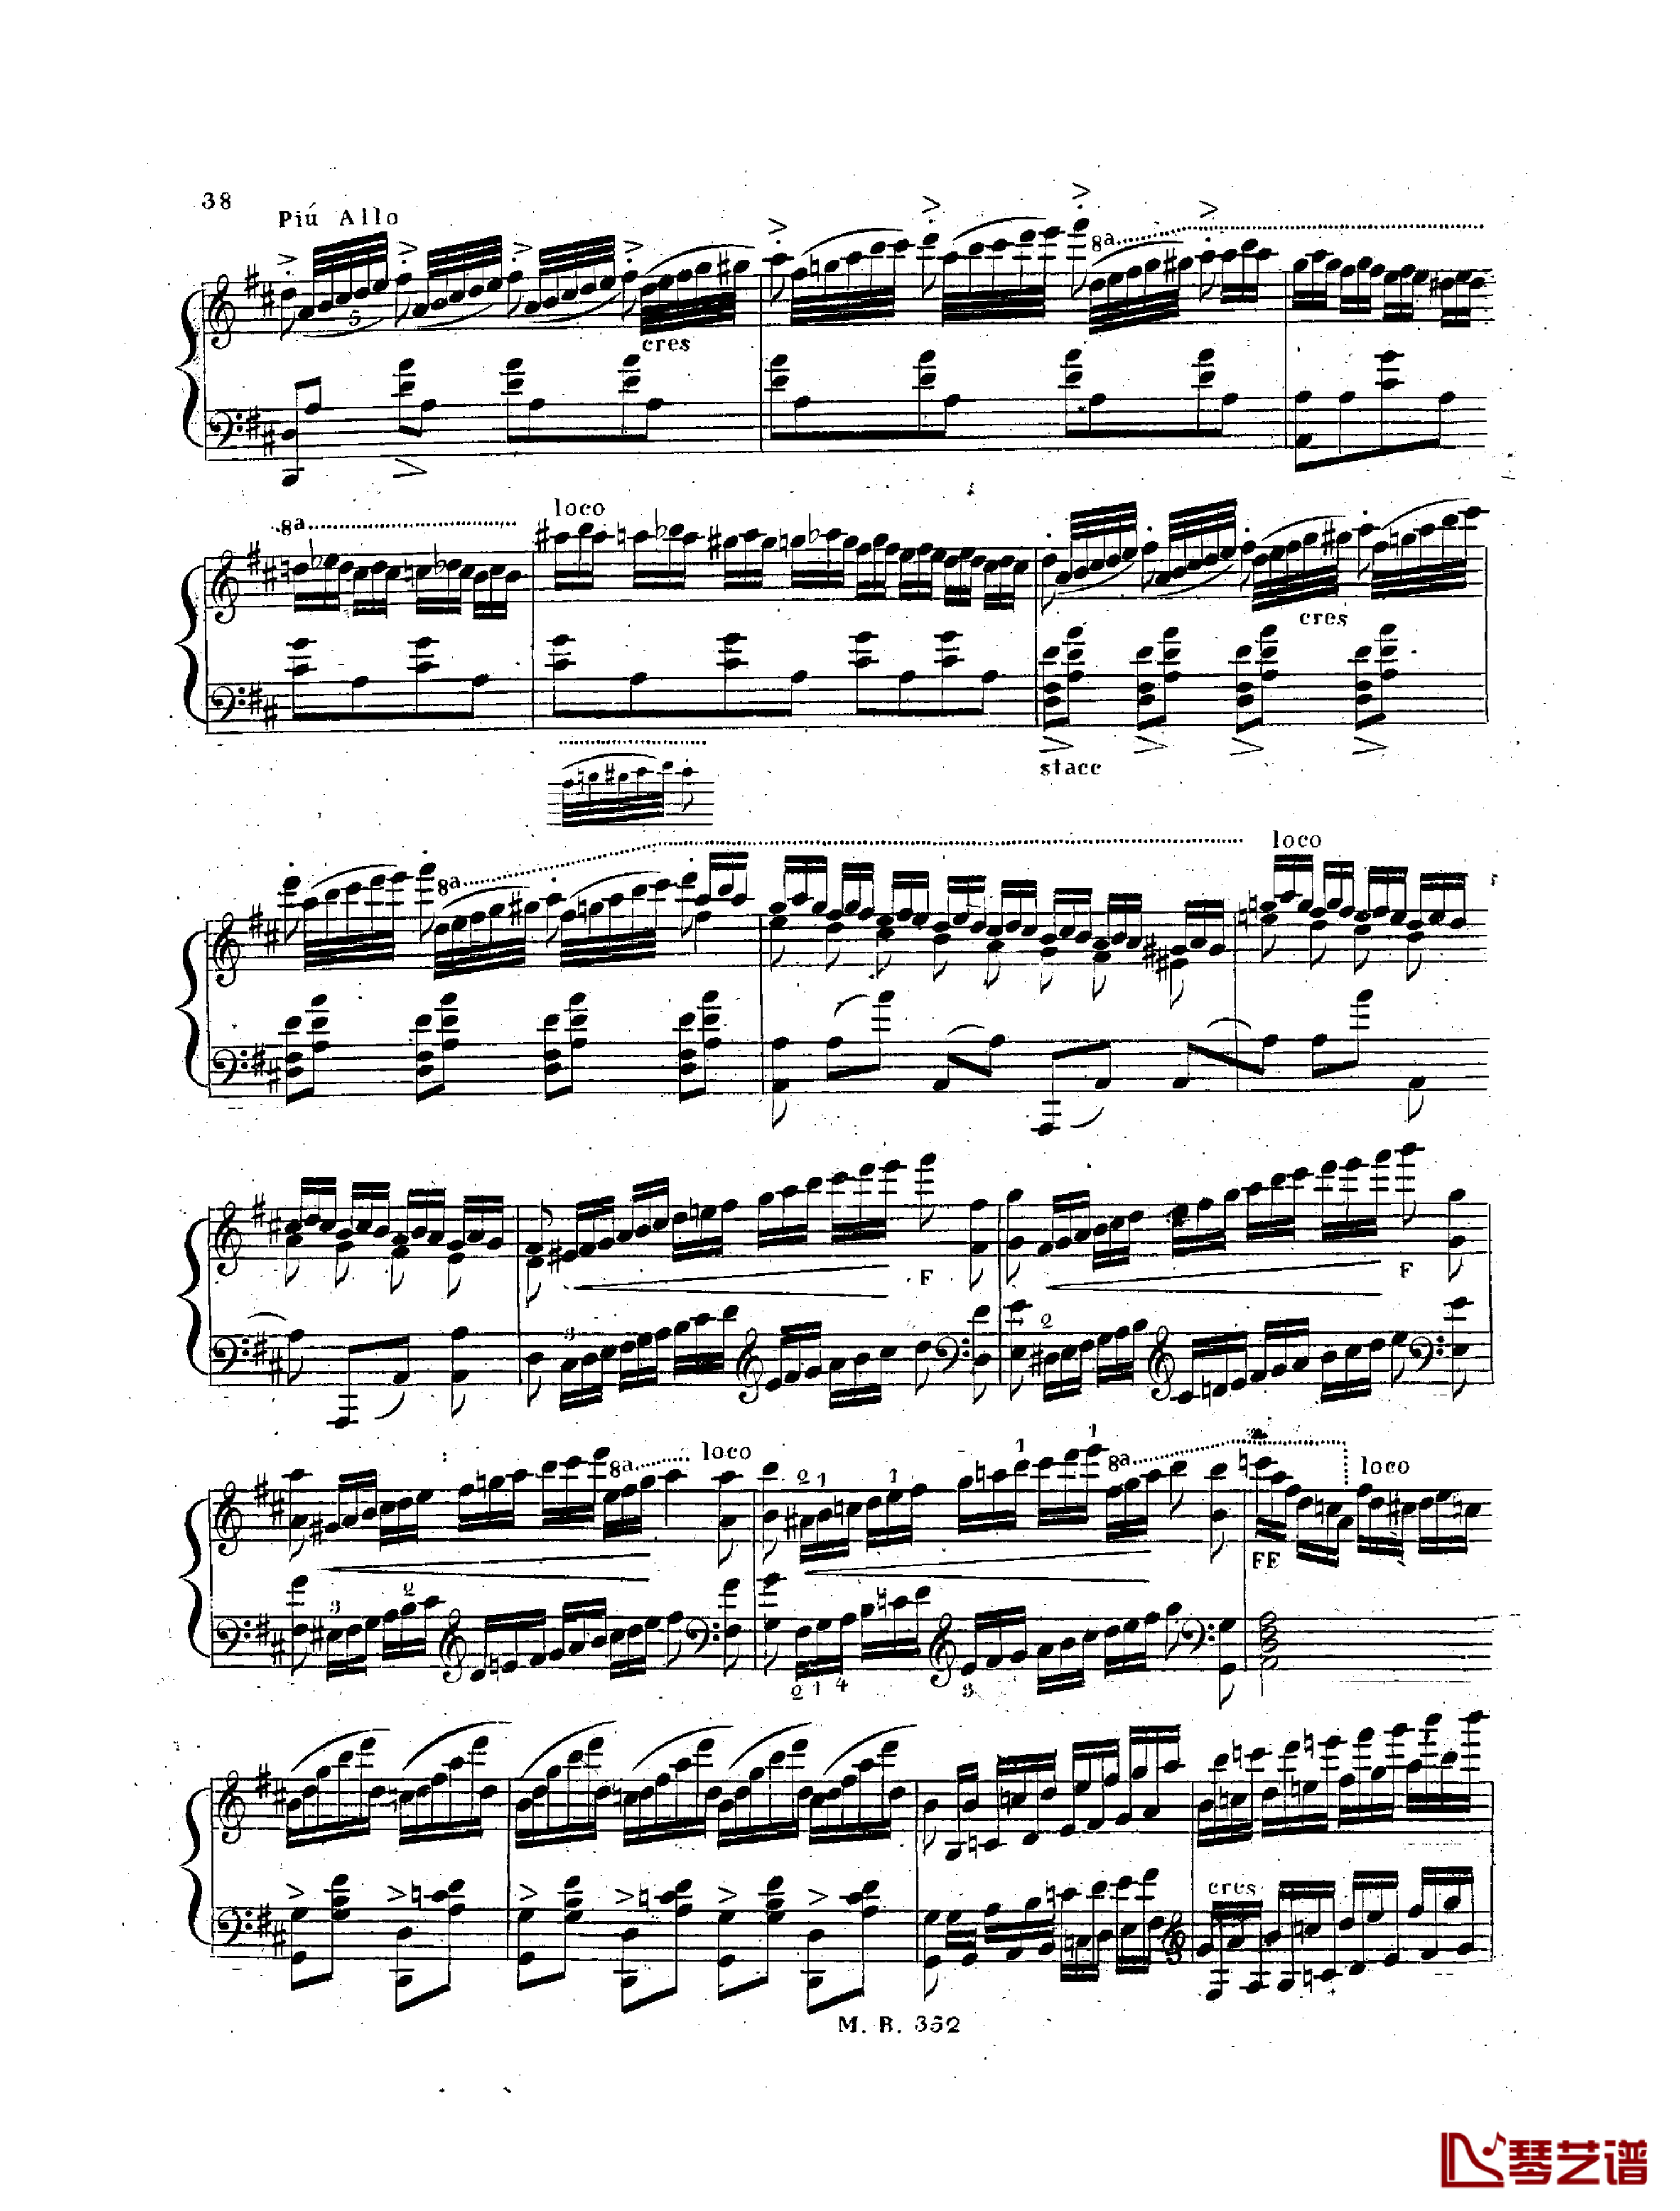  d小调第一钢琴协奏曲 Op.61  第三乐章钢琴谱-卡尔克布雷纳14